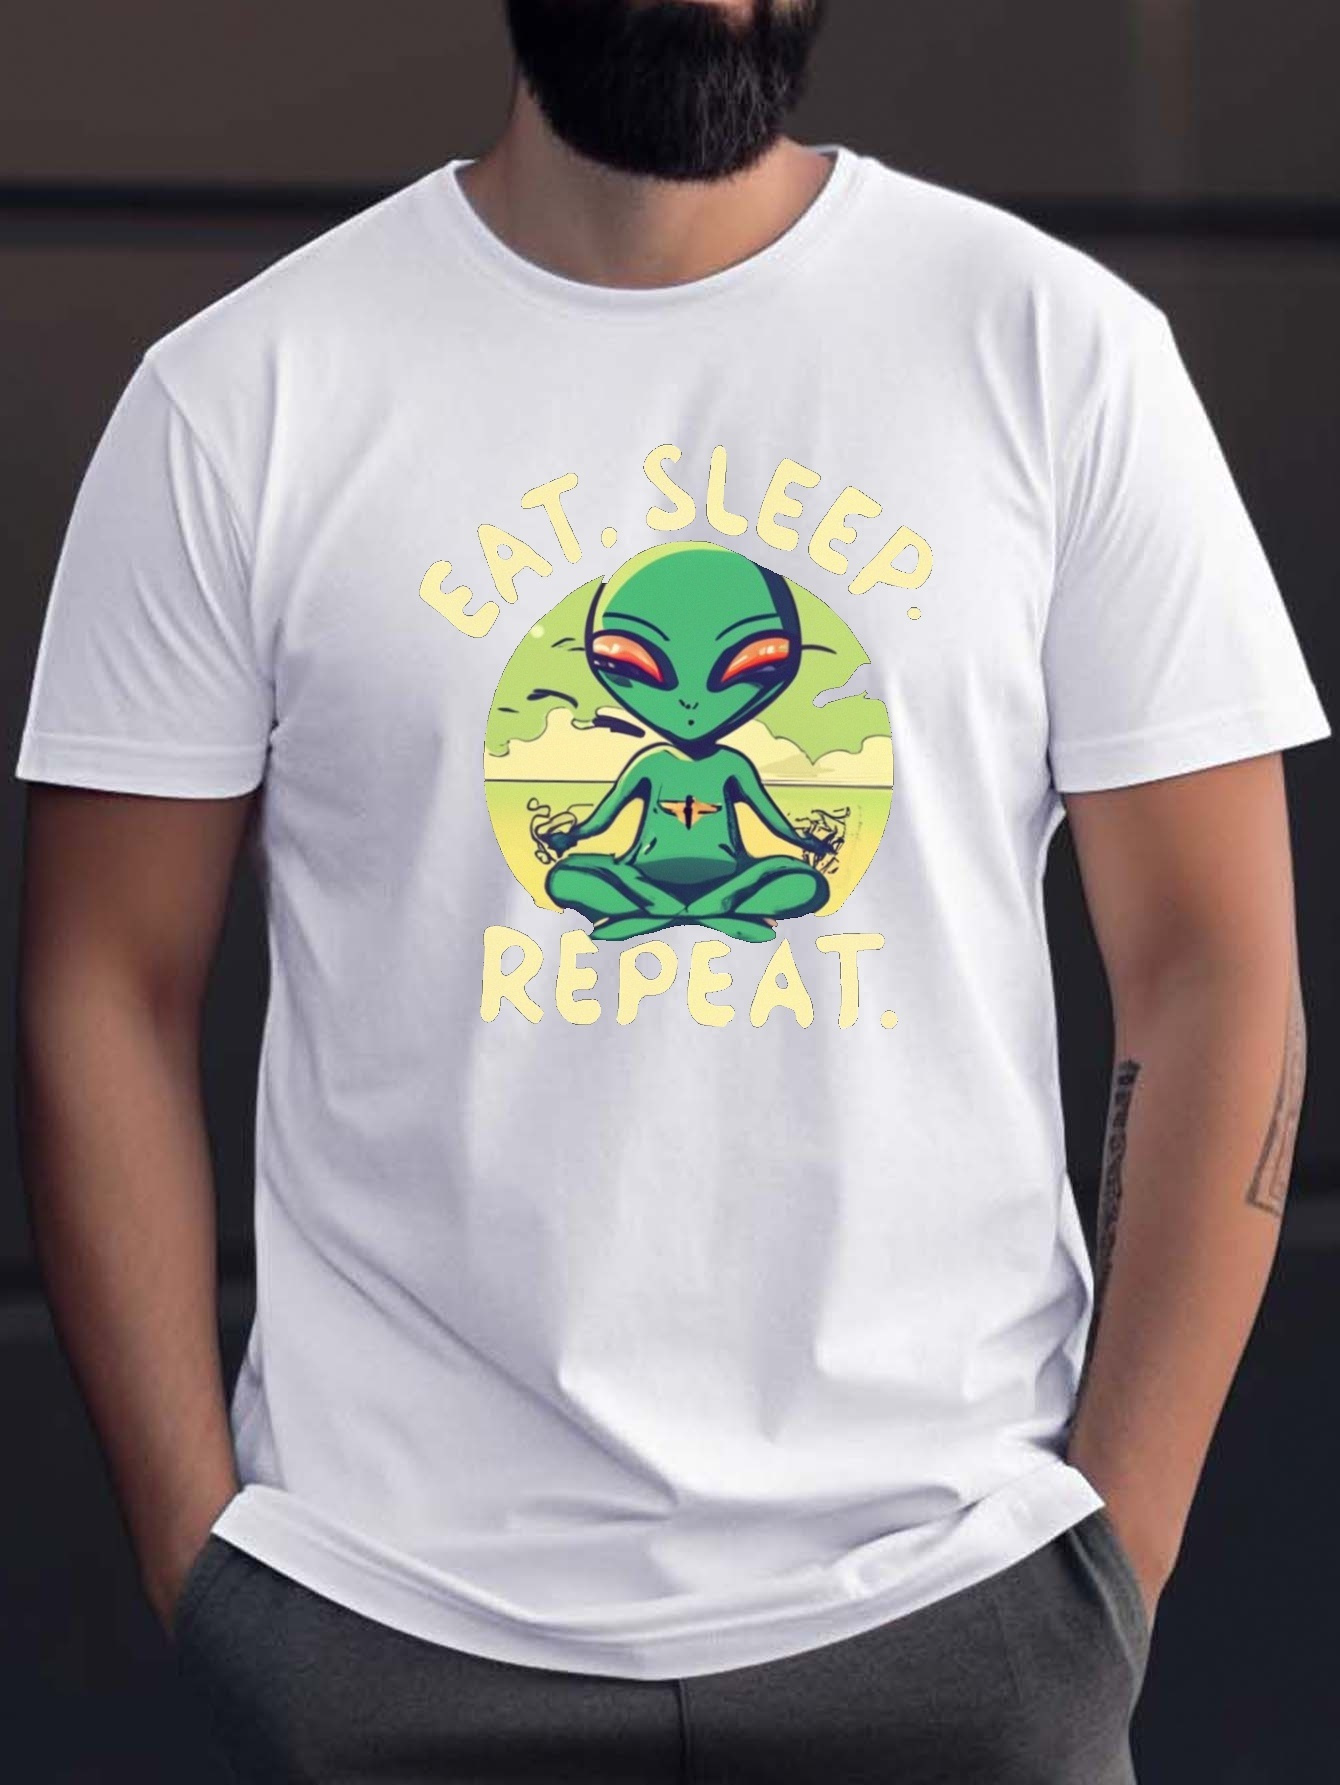 Modelo Imagem de desenho animado Alienígena Camiseta on-line